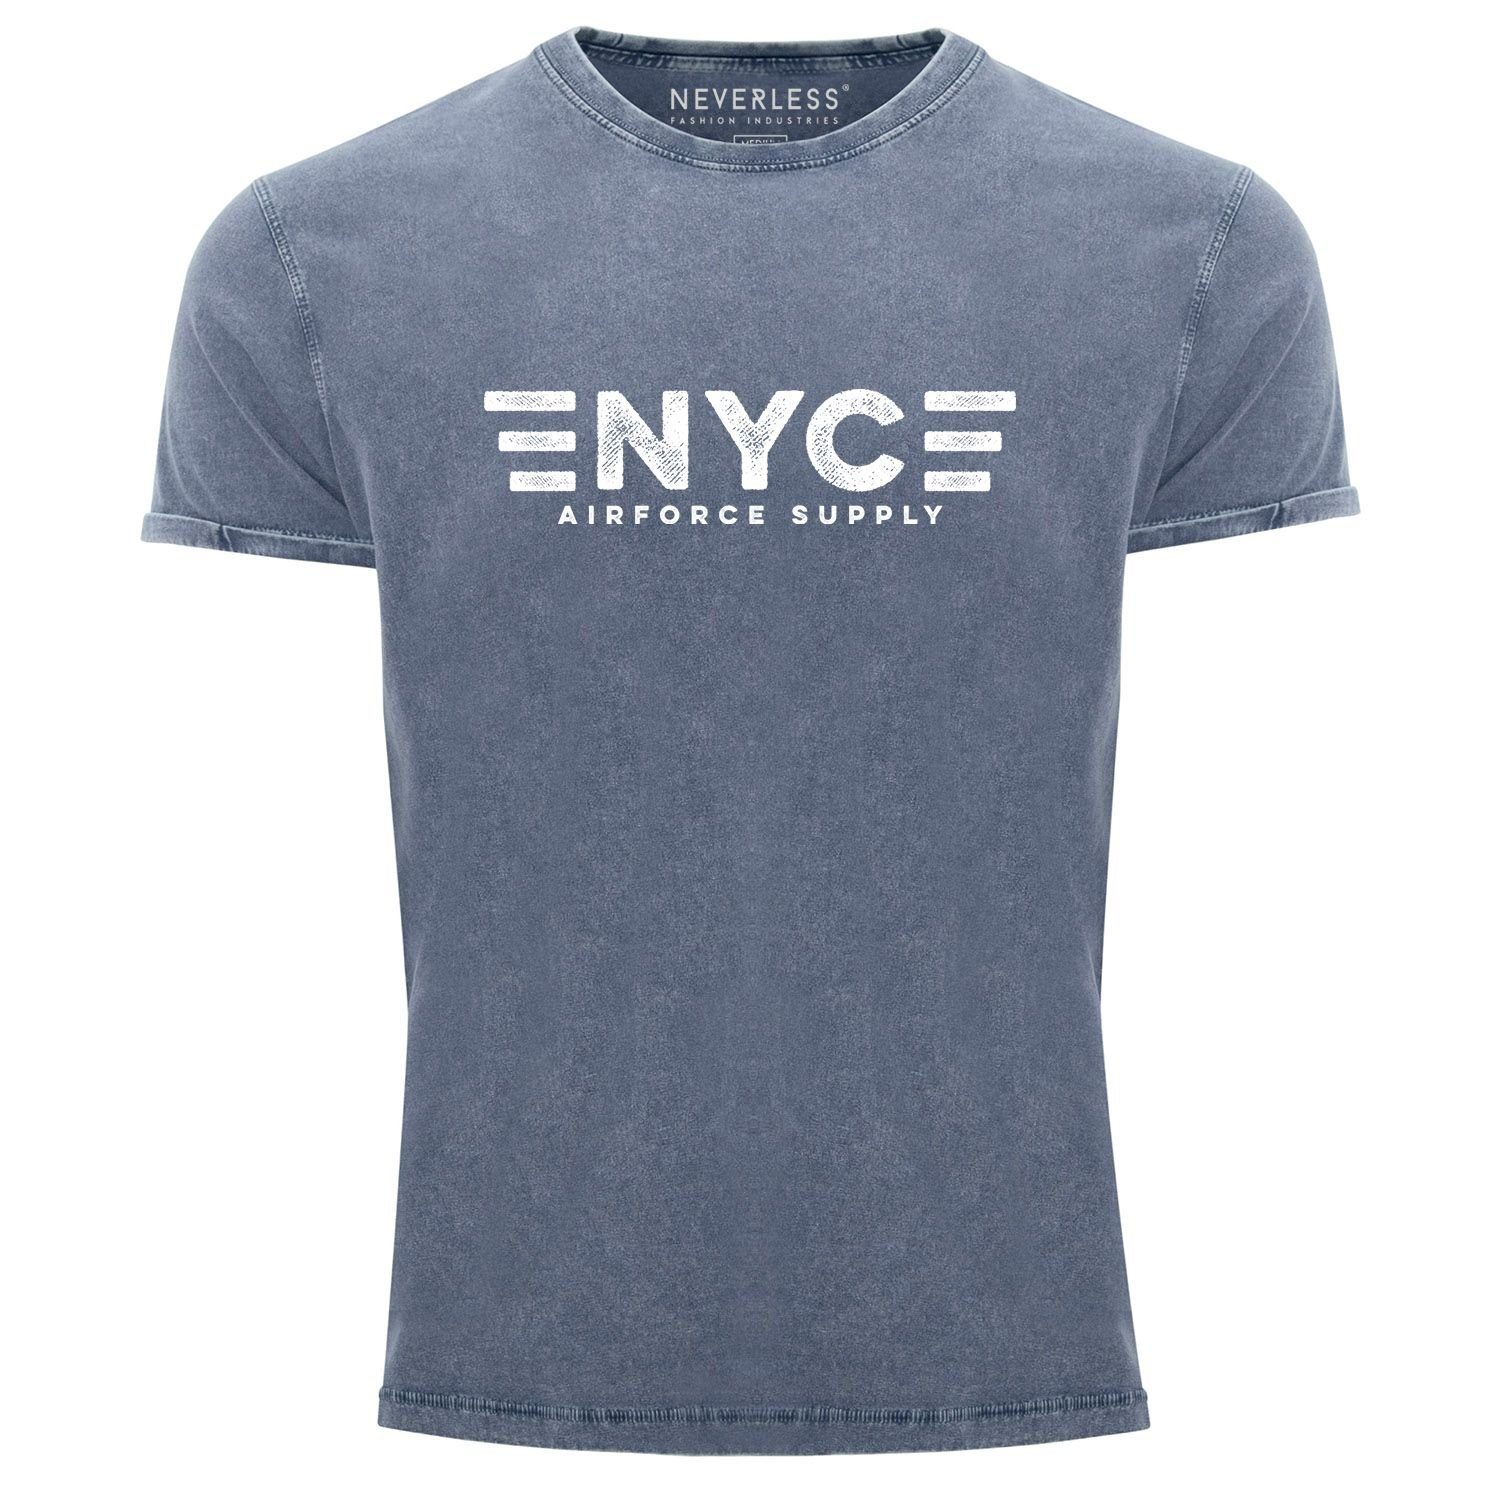 Neverless Print-Shirt Herren Fit Supply Neverless® T-Shirt Print mit Printshirt NYC Vintage Airforce Shirt Print blau Used York Aufdruck Look Slim City New